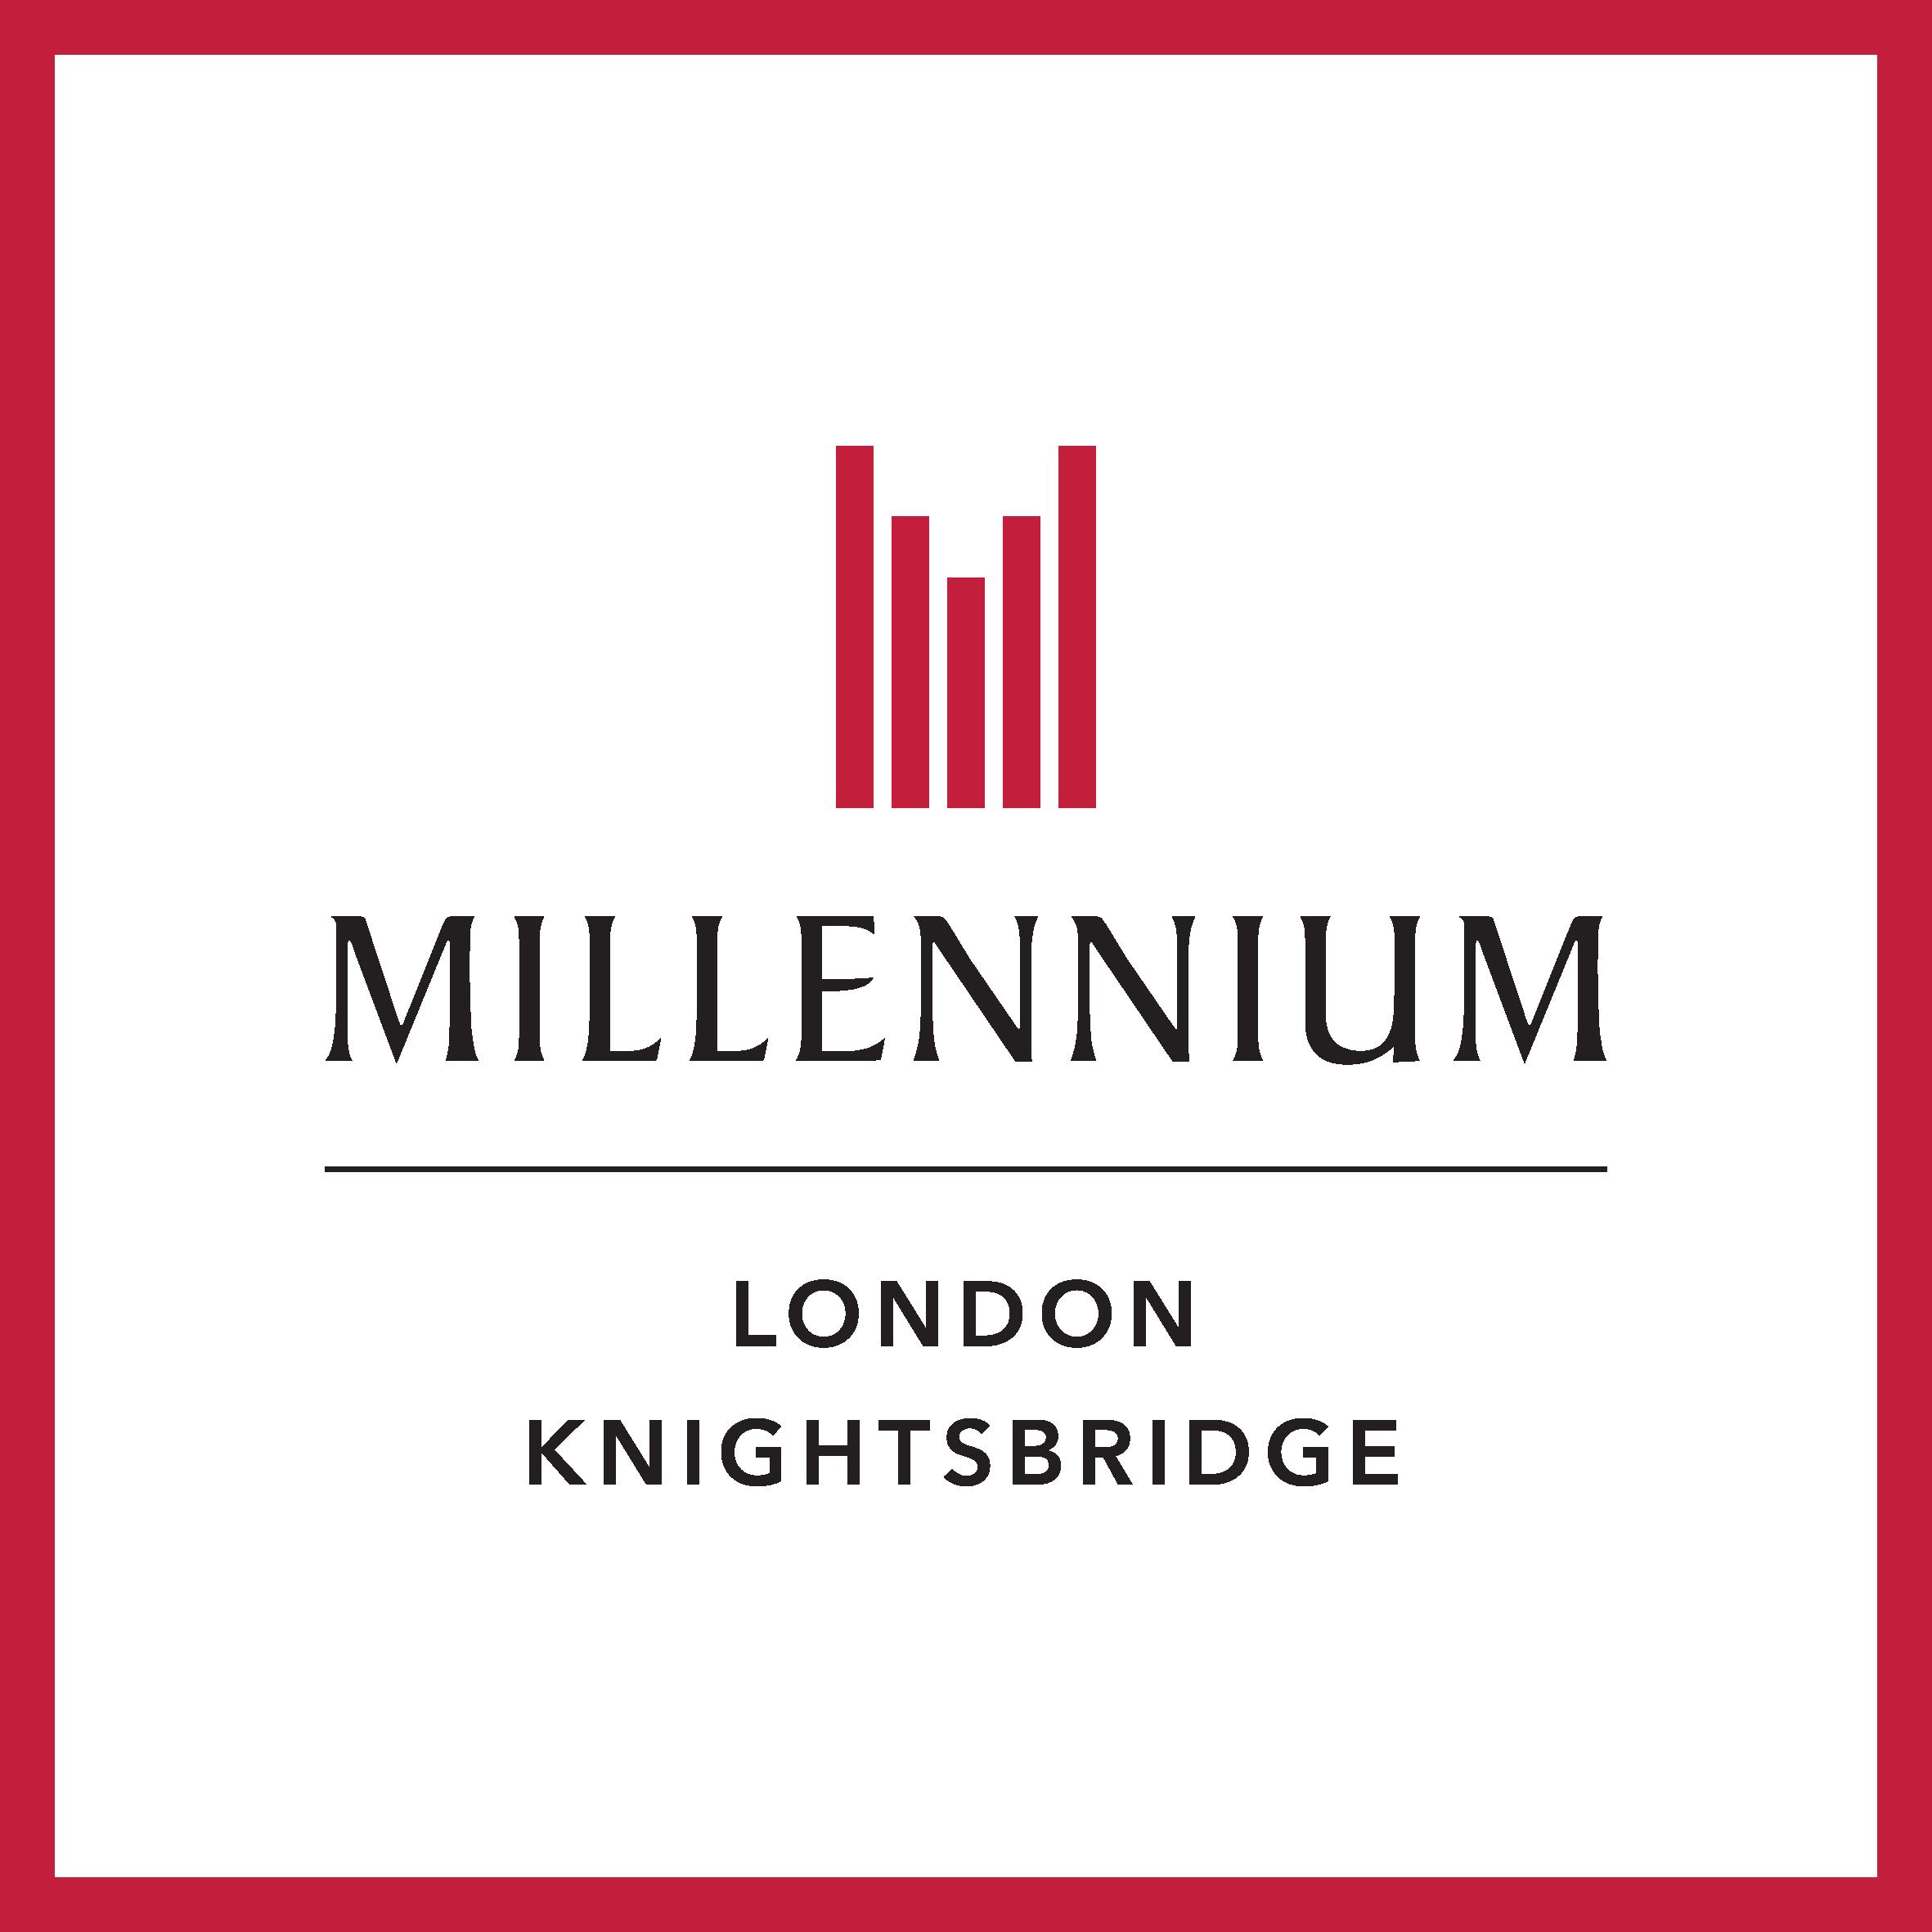 Millennium Hotel London Knightsbridge - London, London SW1X 9NU - 020 7235 4377 | ShowMeLocal.com